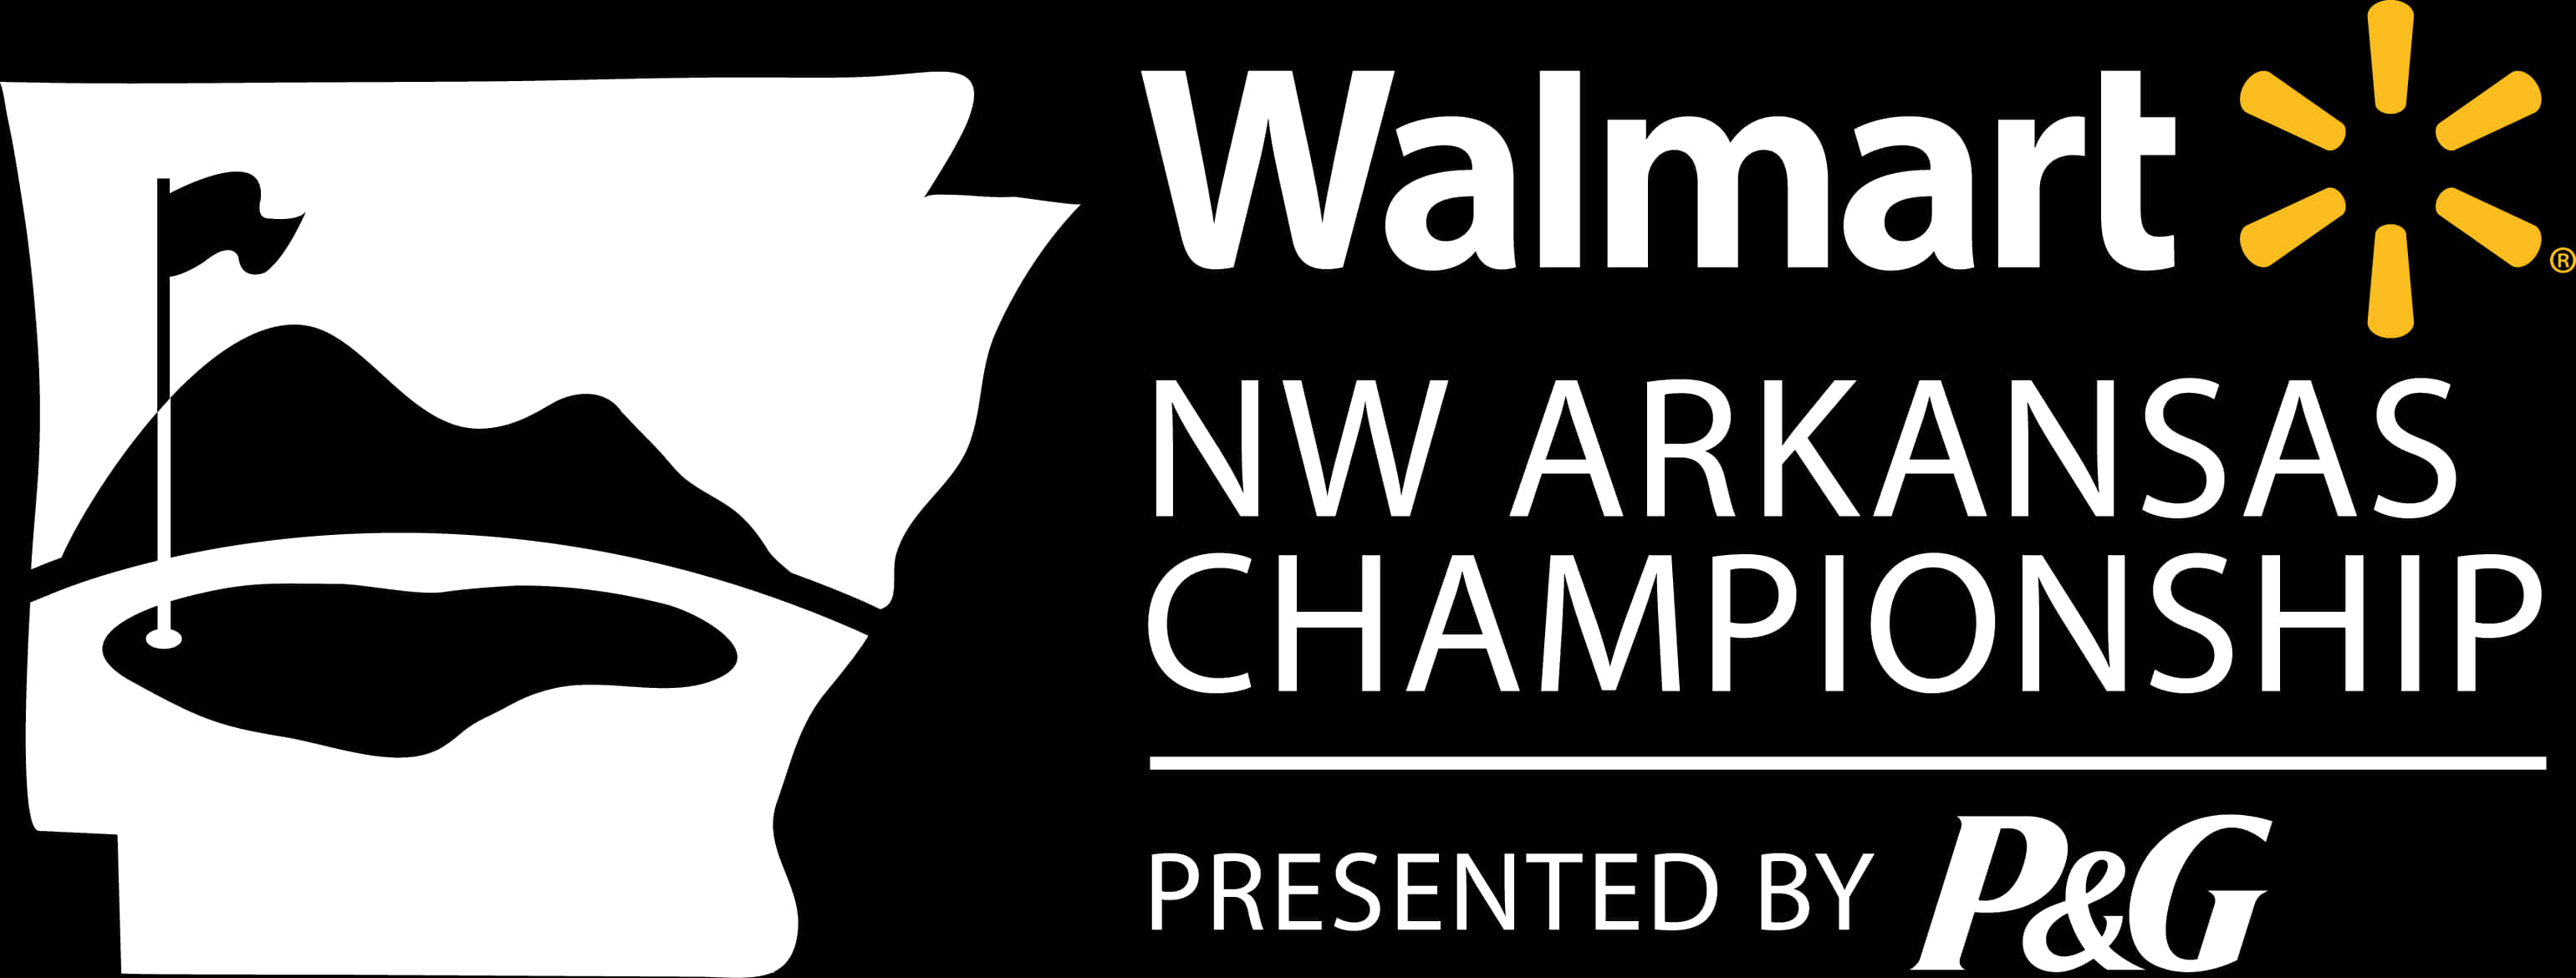 Walmart N W Arkansas Championship Logo